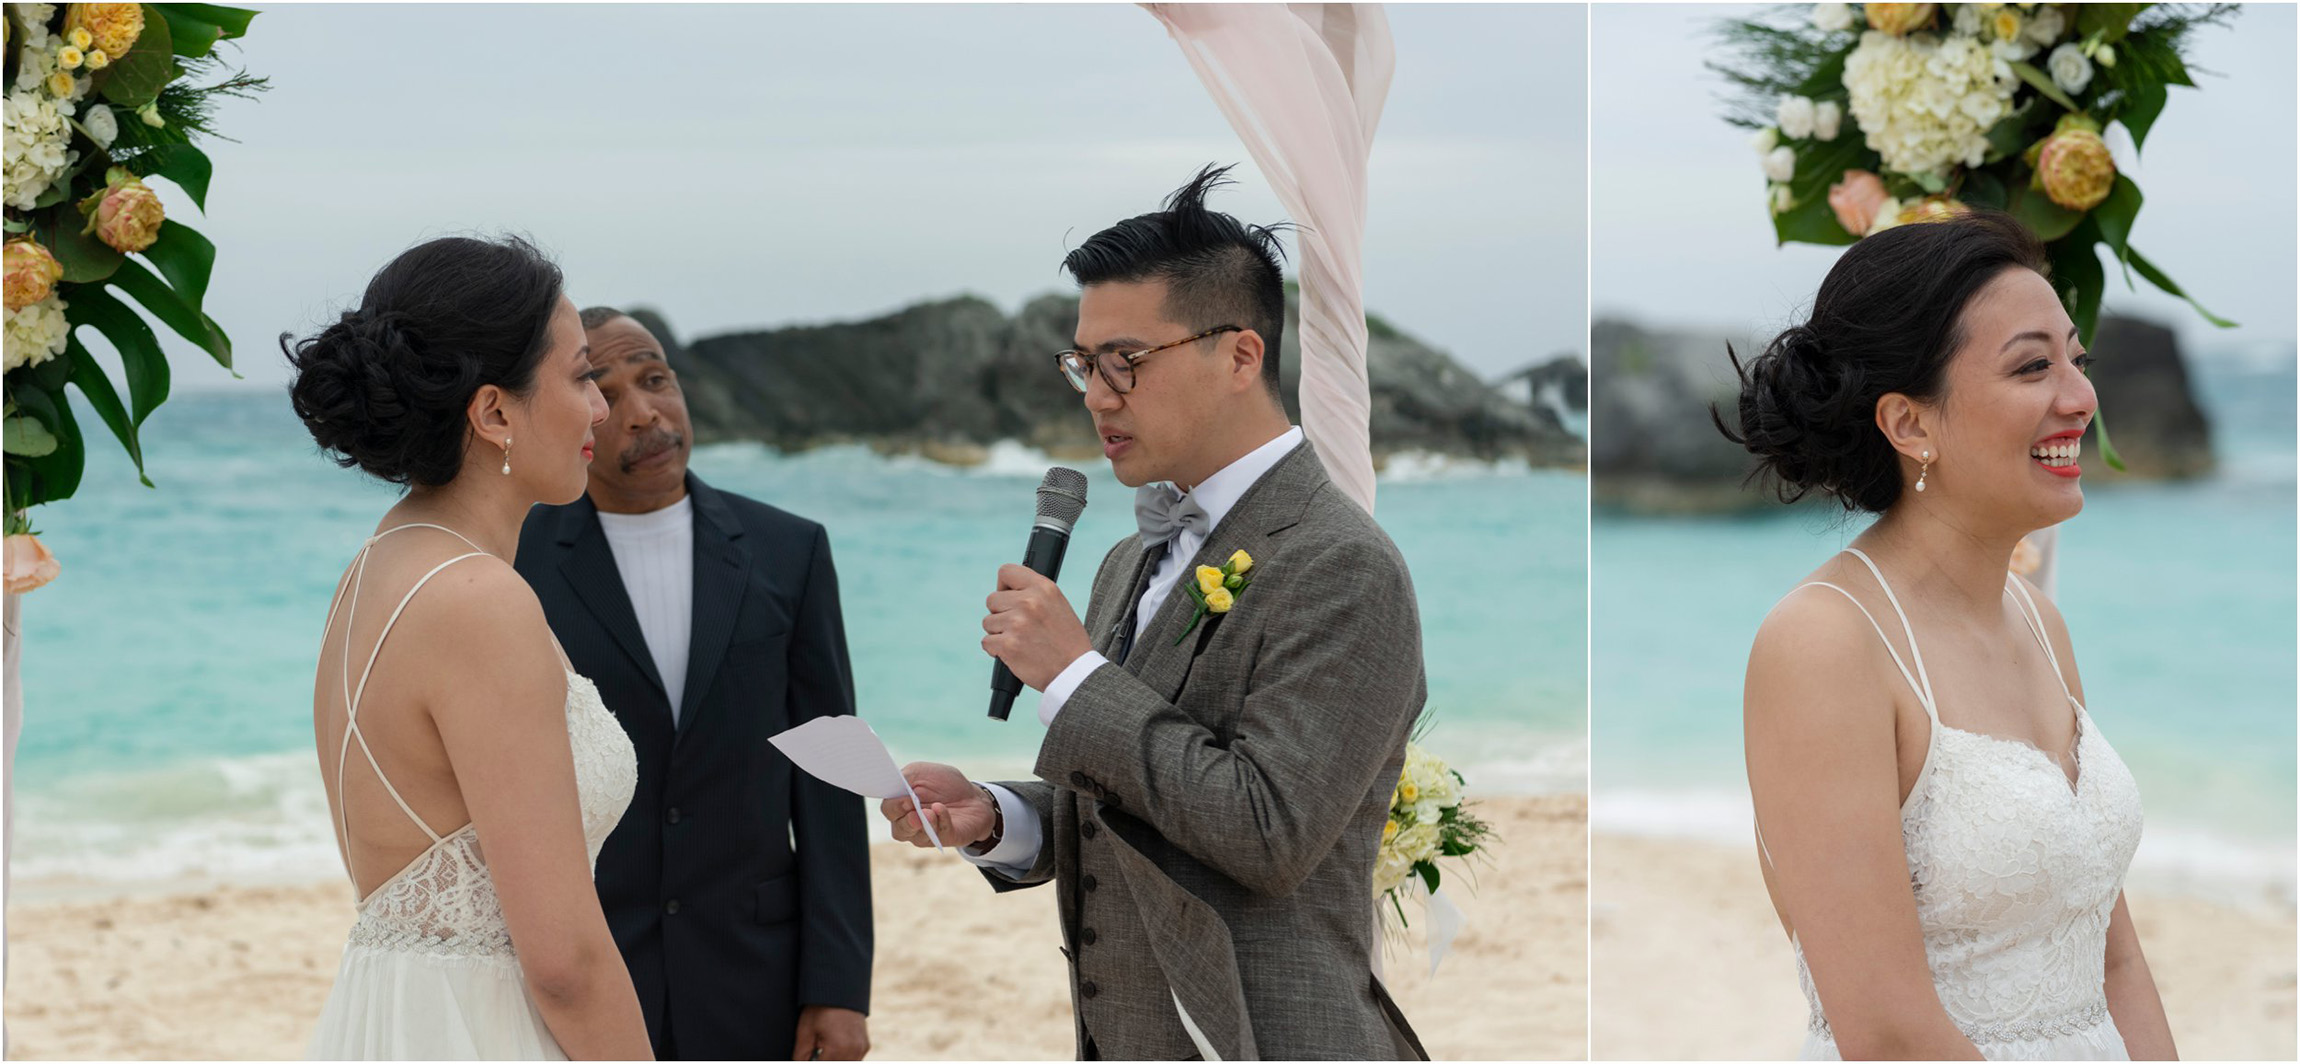 ©FianderFoto_Bermuda Wedding Photographer_Fairmont Southampton_Amy_Wilson_075.jpg